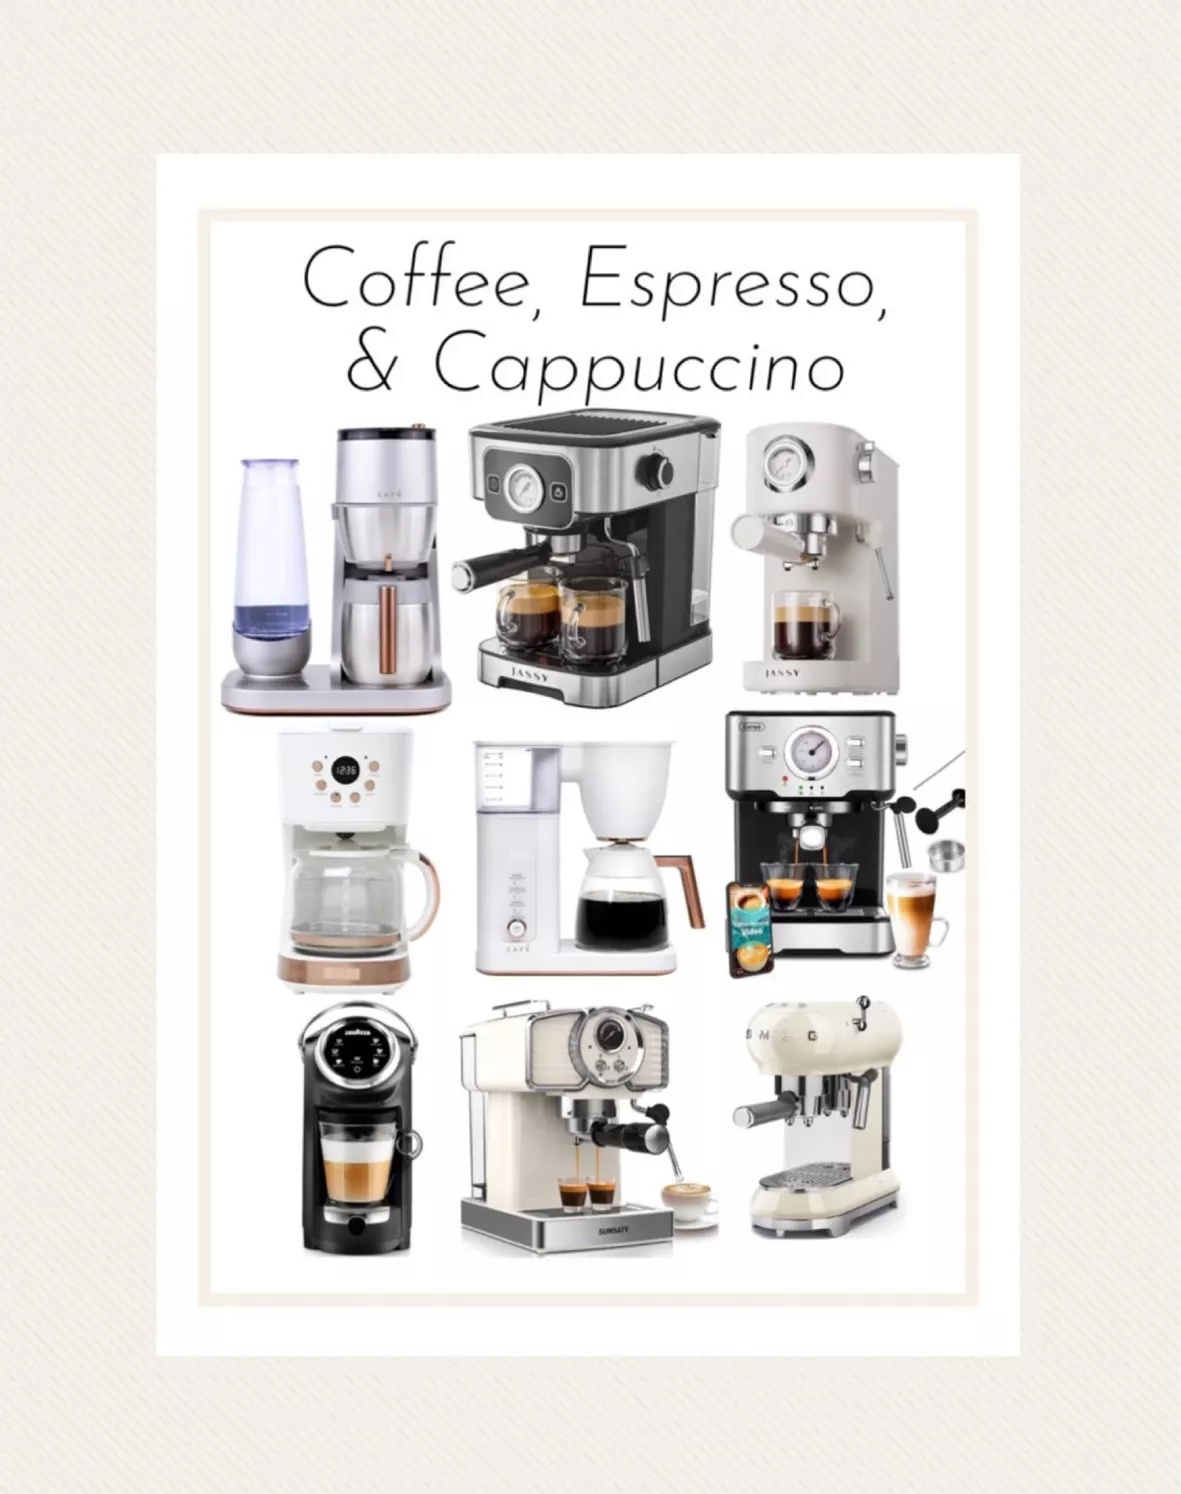 JASSY Automatic Espresso Coffee Machine, Latte Coffee Maker